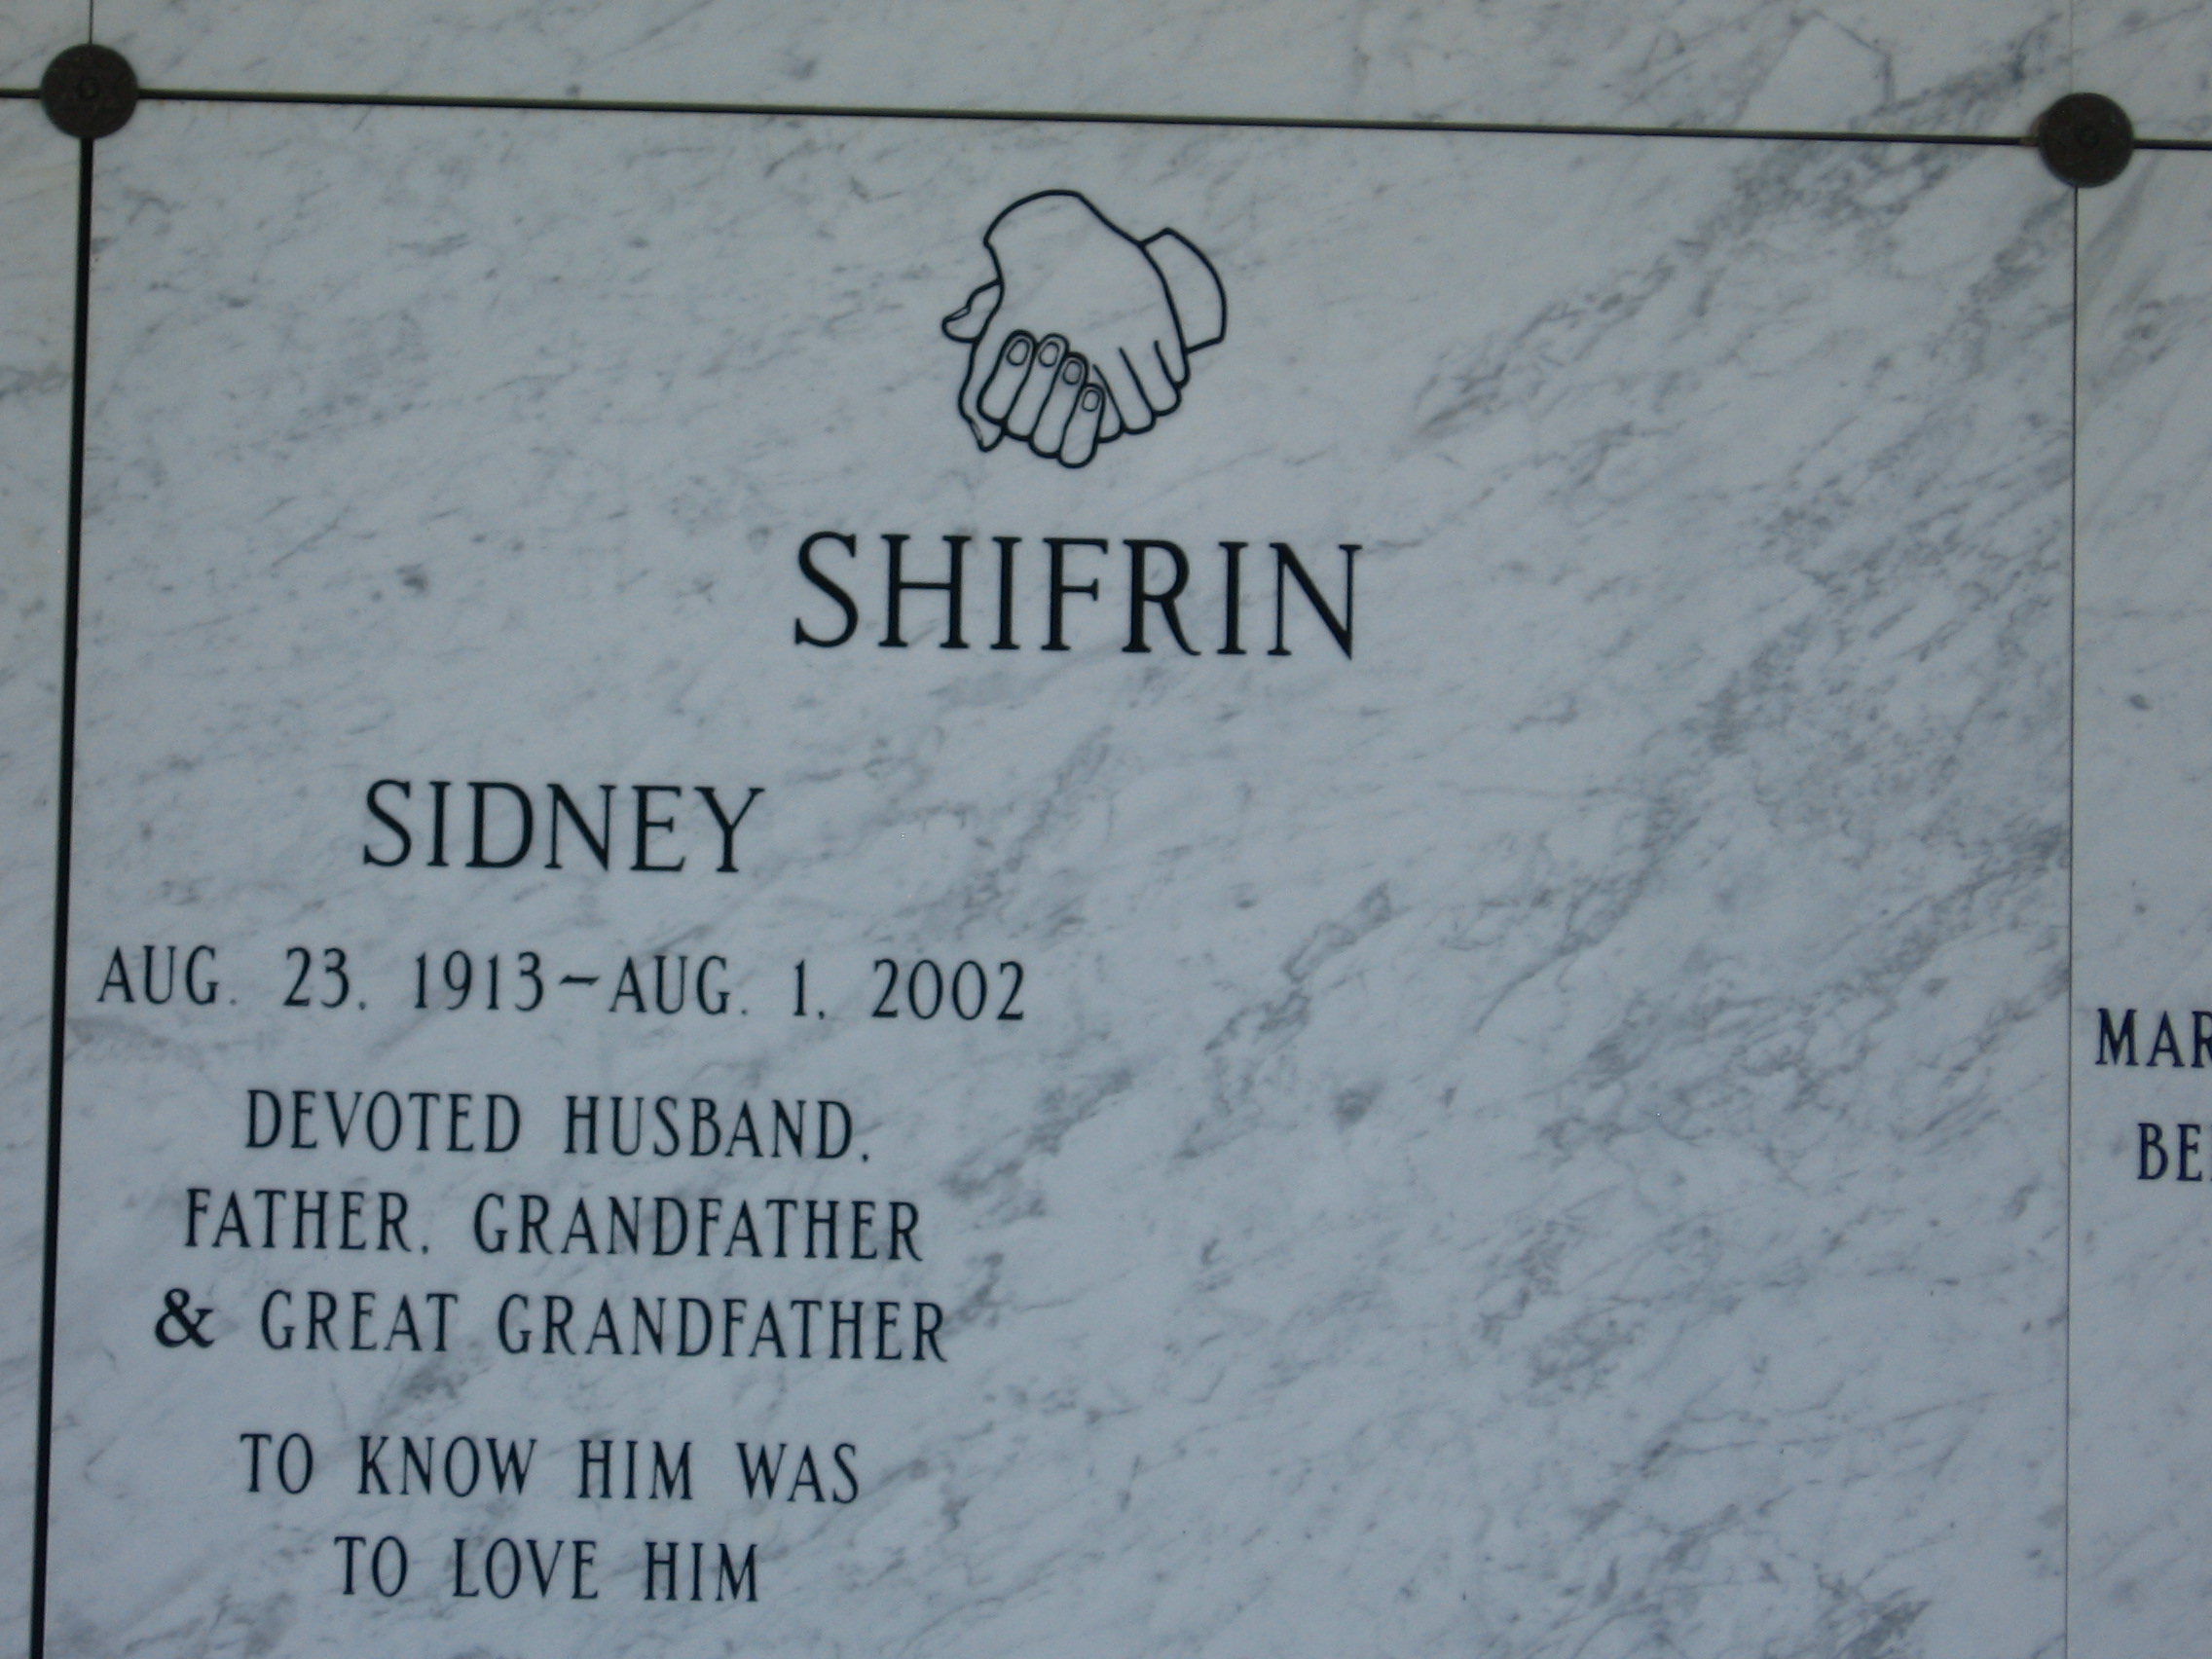 Sidney Shifrin